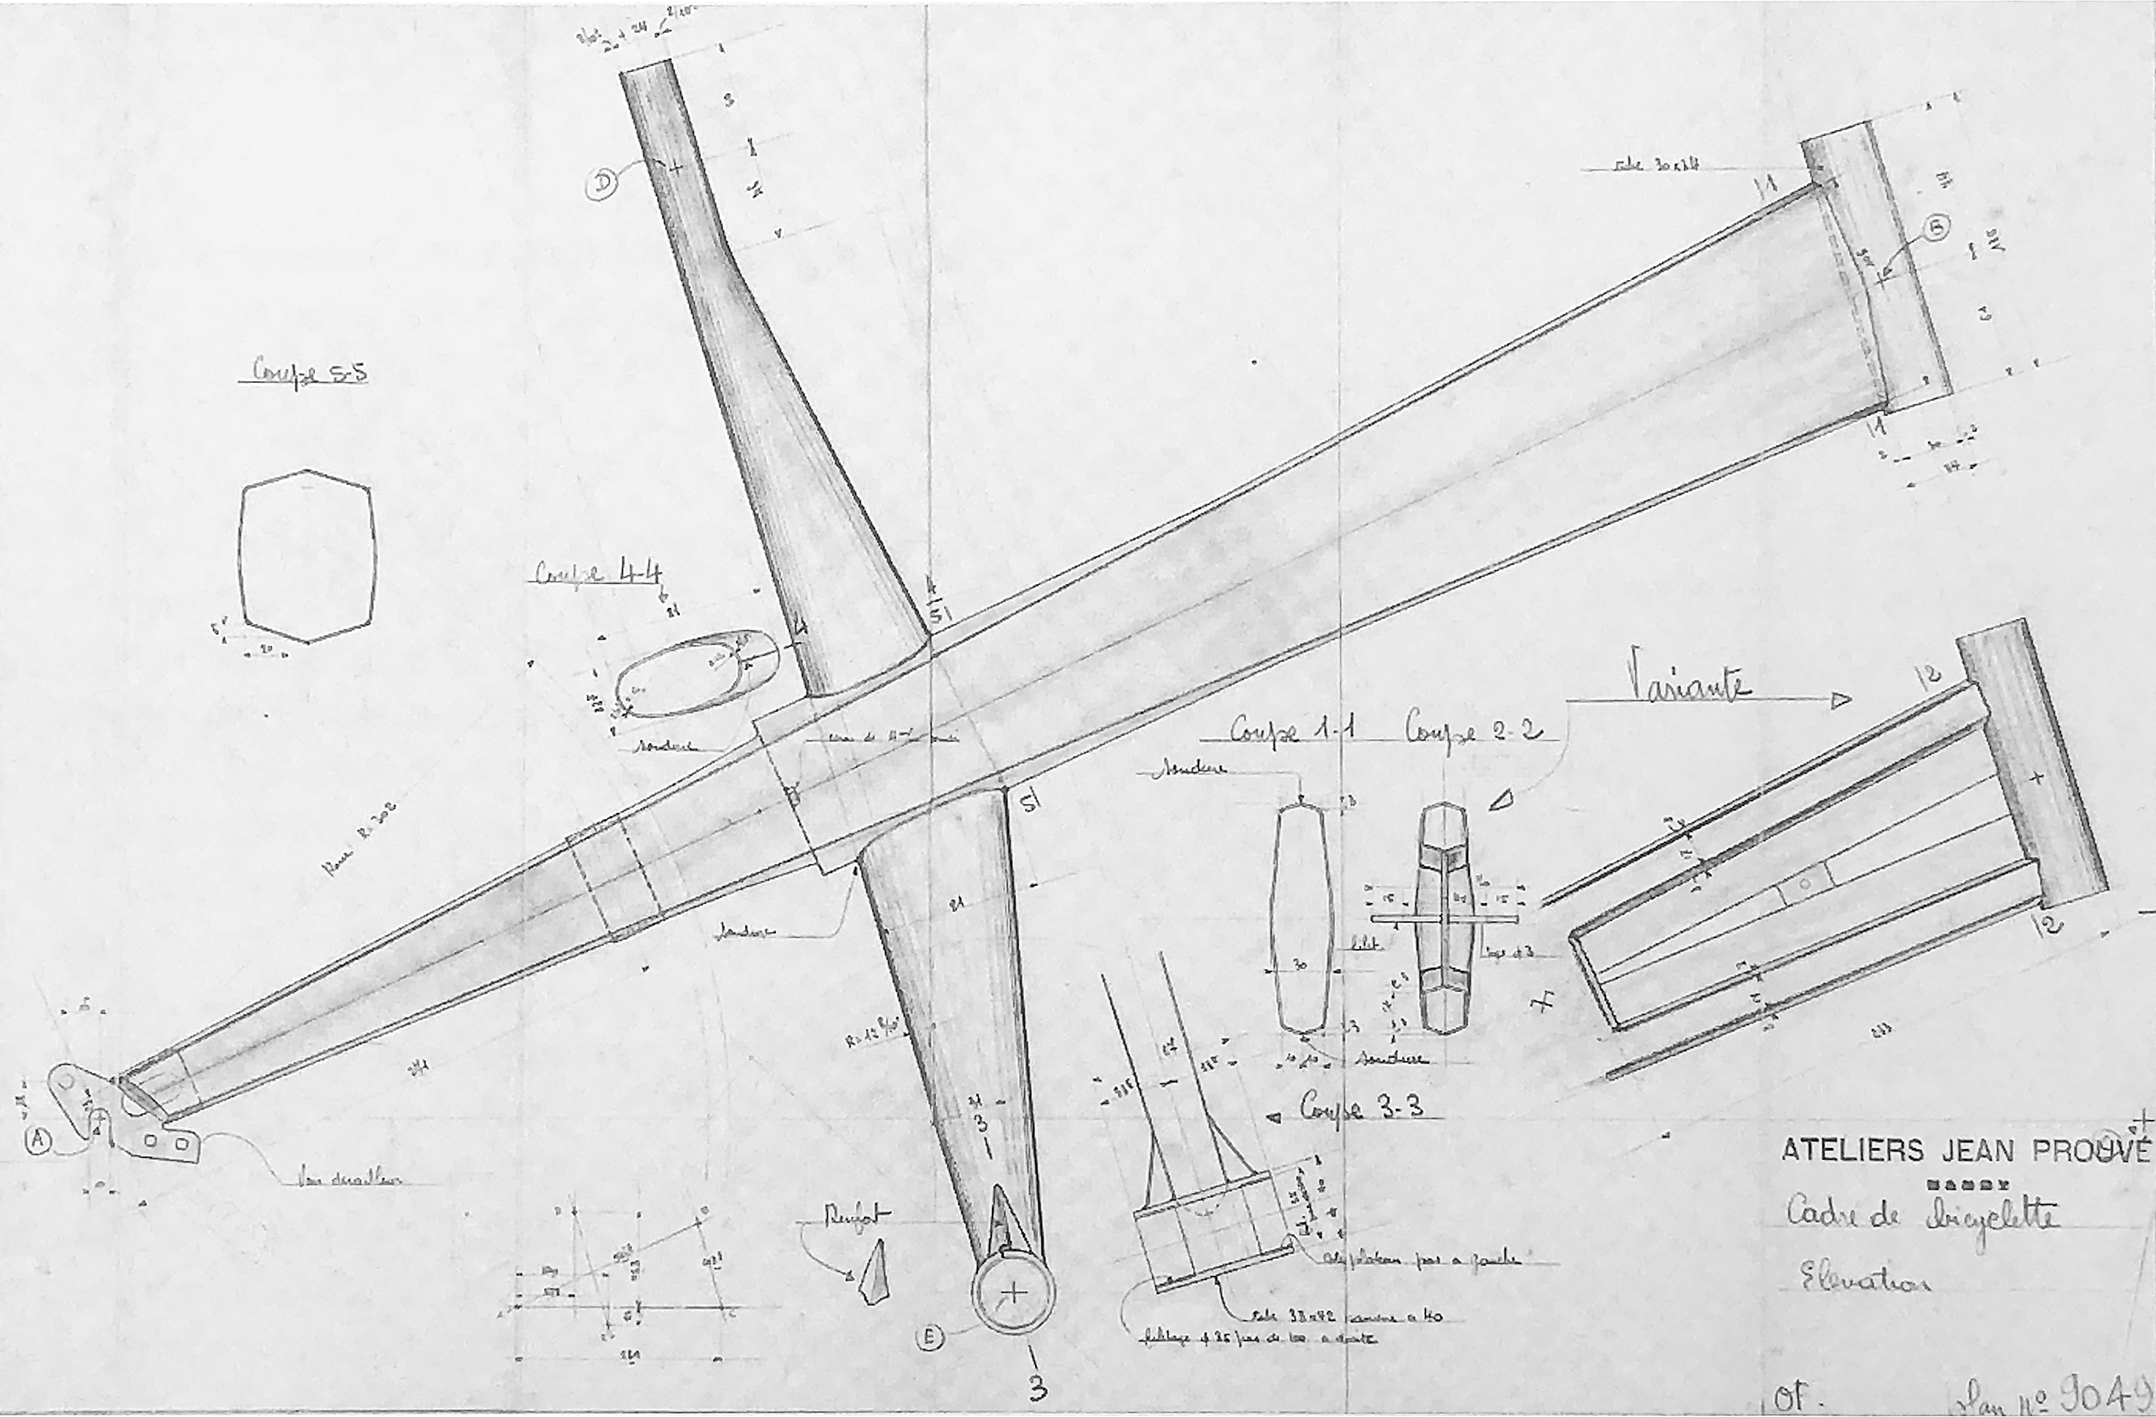 “Bicycle frame”. Construction plan no. 9049 Ateliers Jean Prouvé, March 1935.